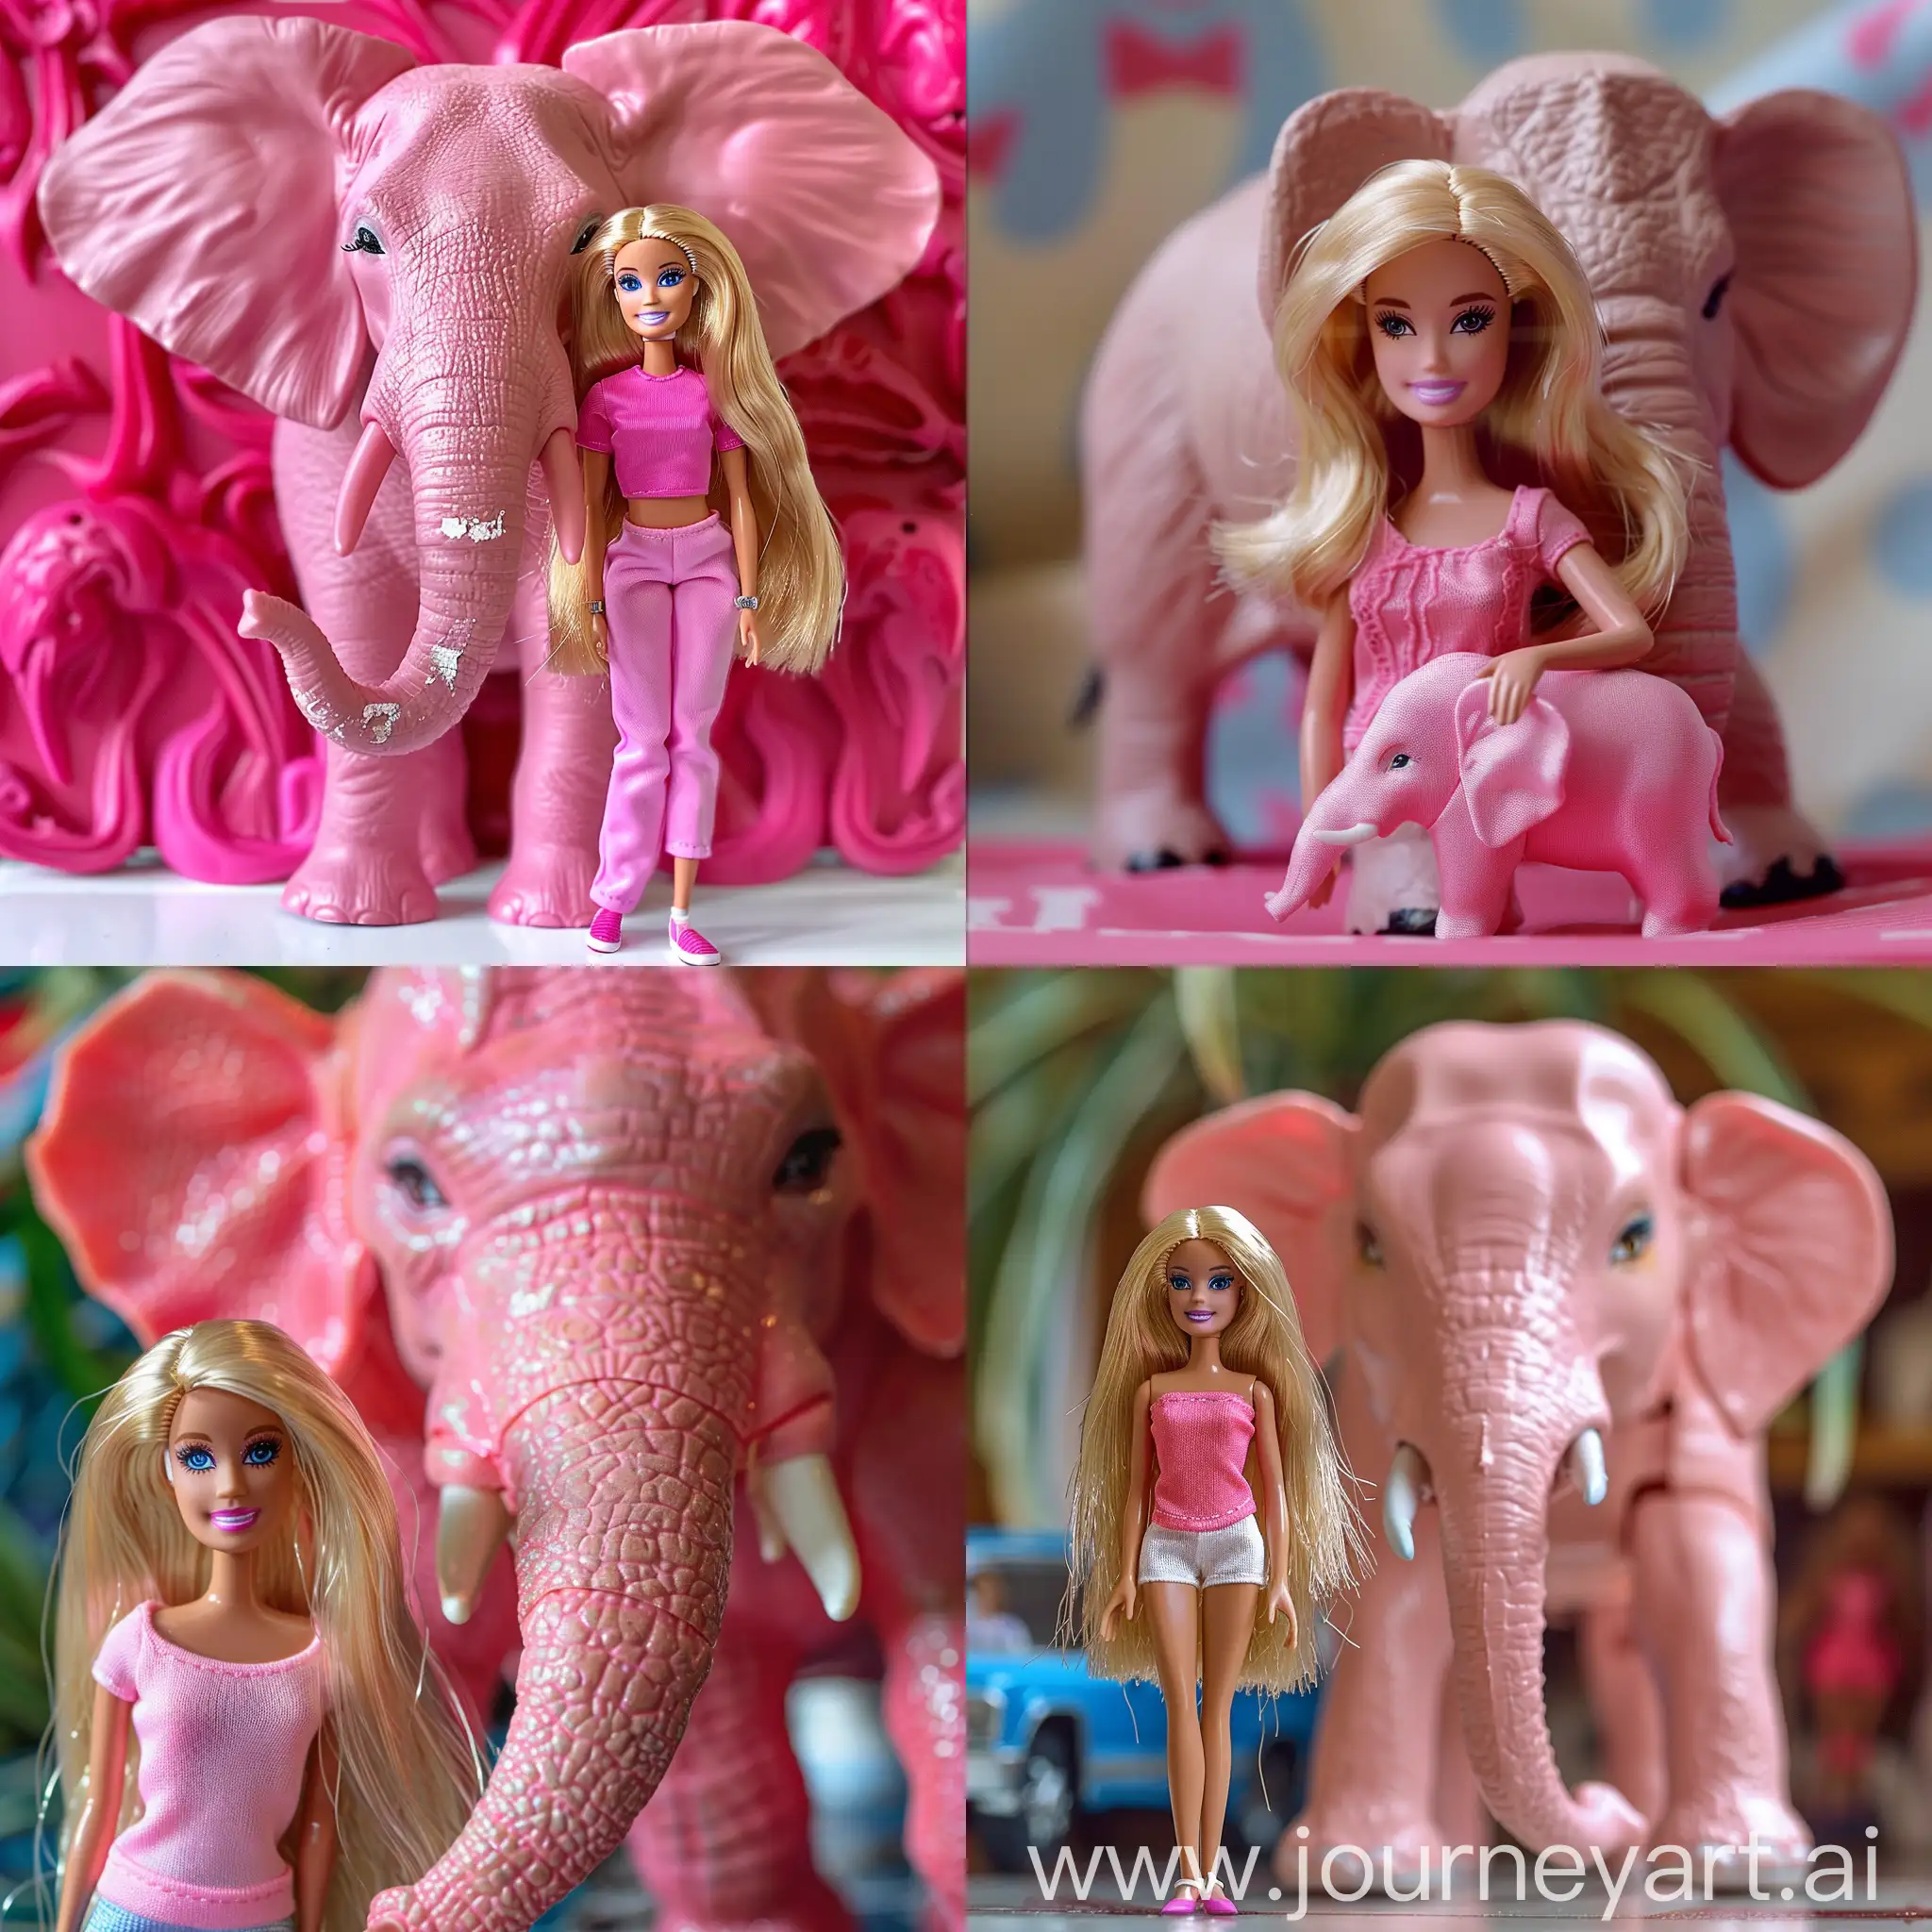 Pink Elephant and barbie